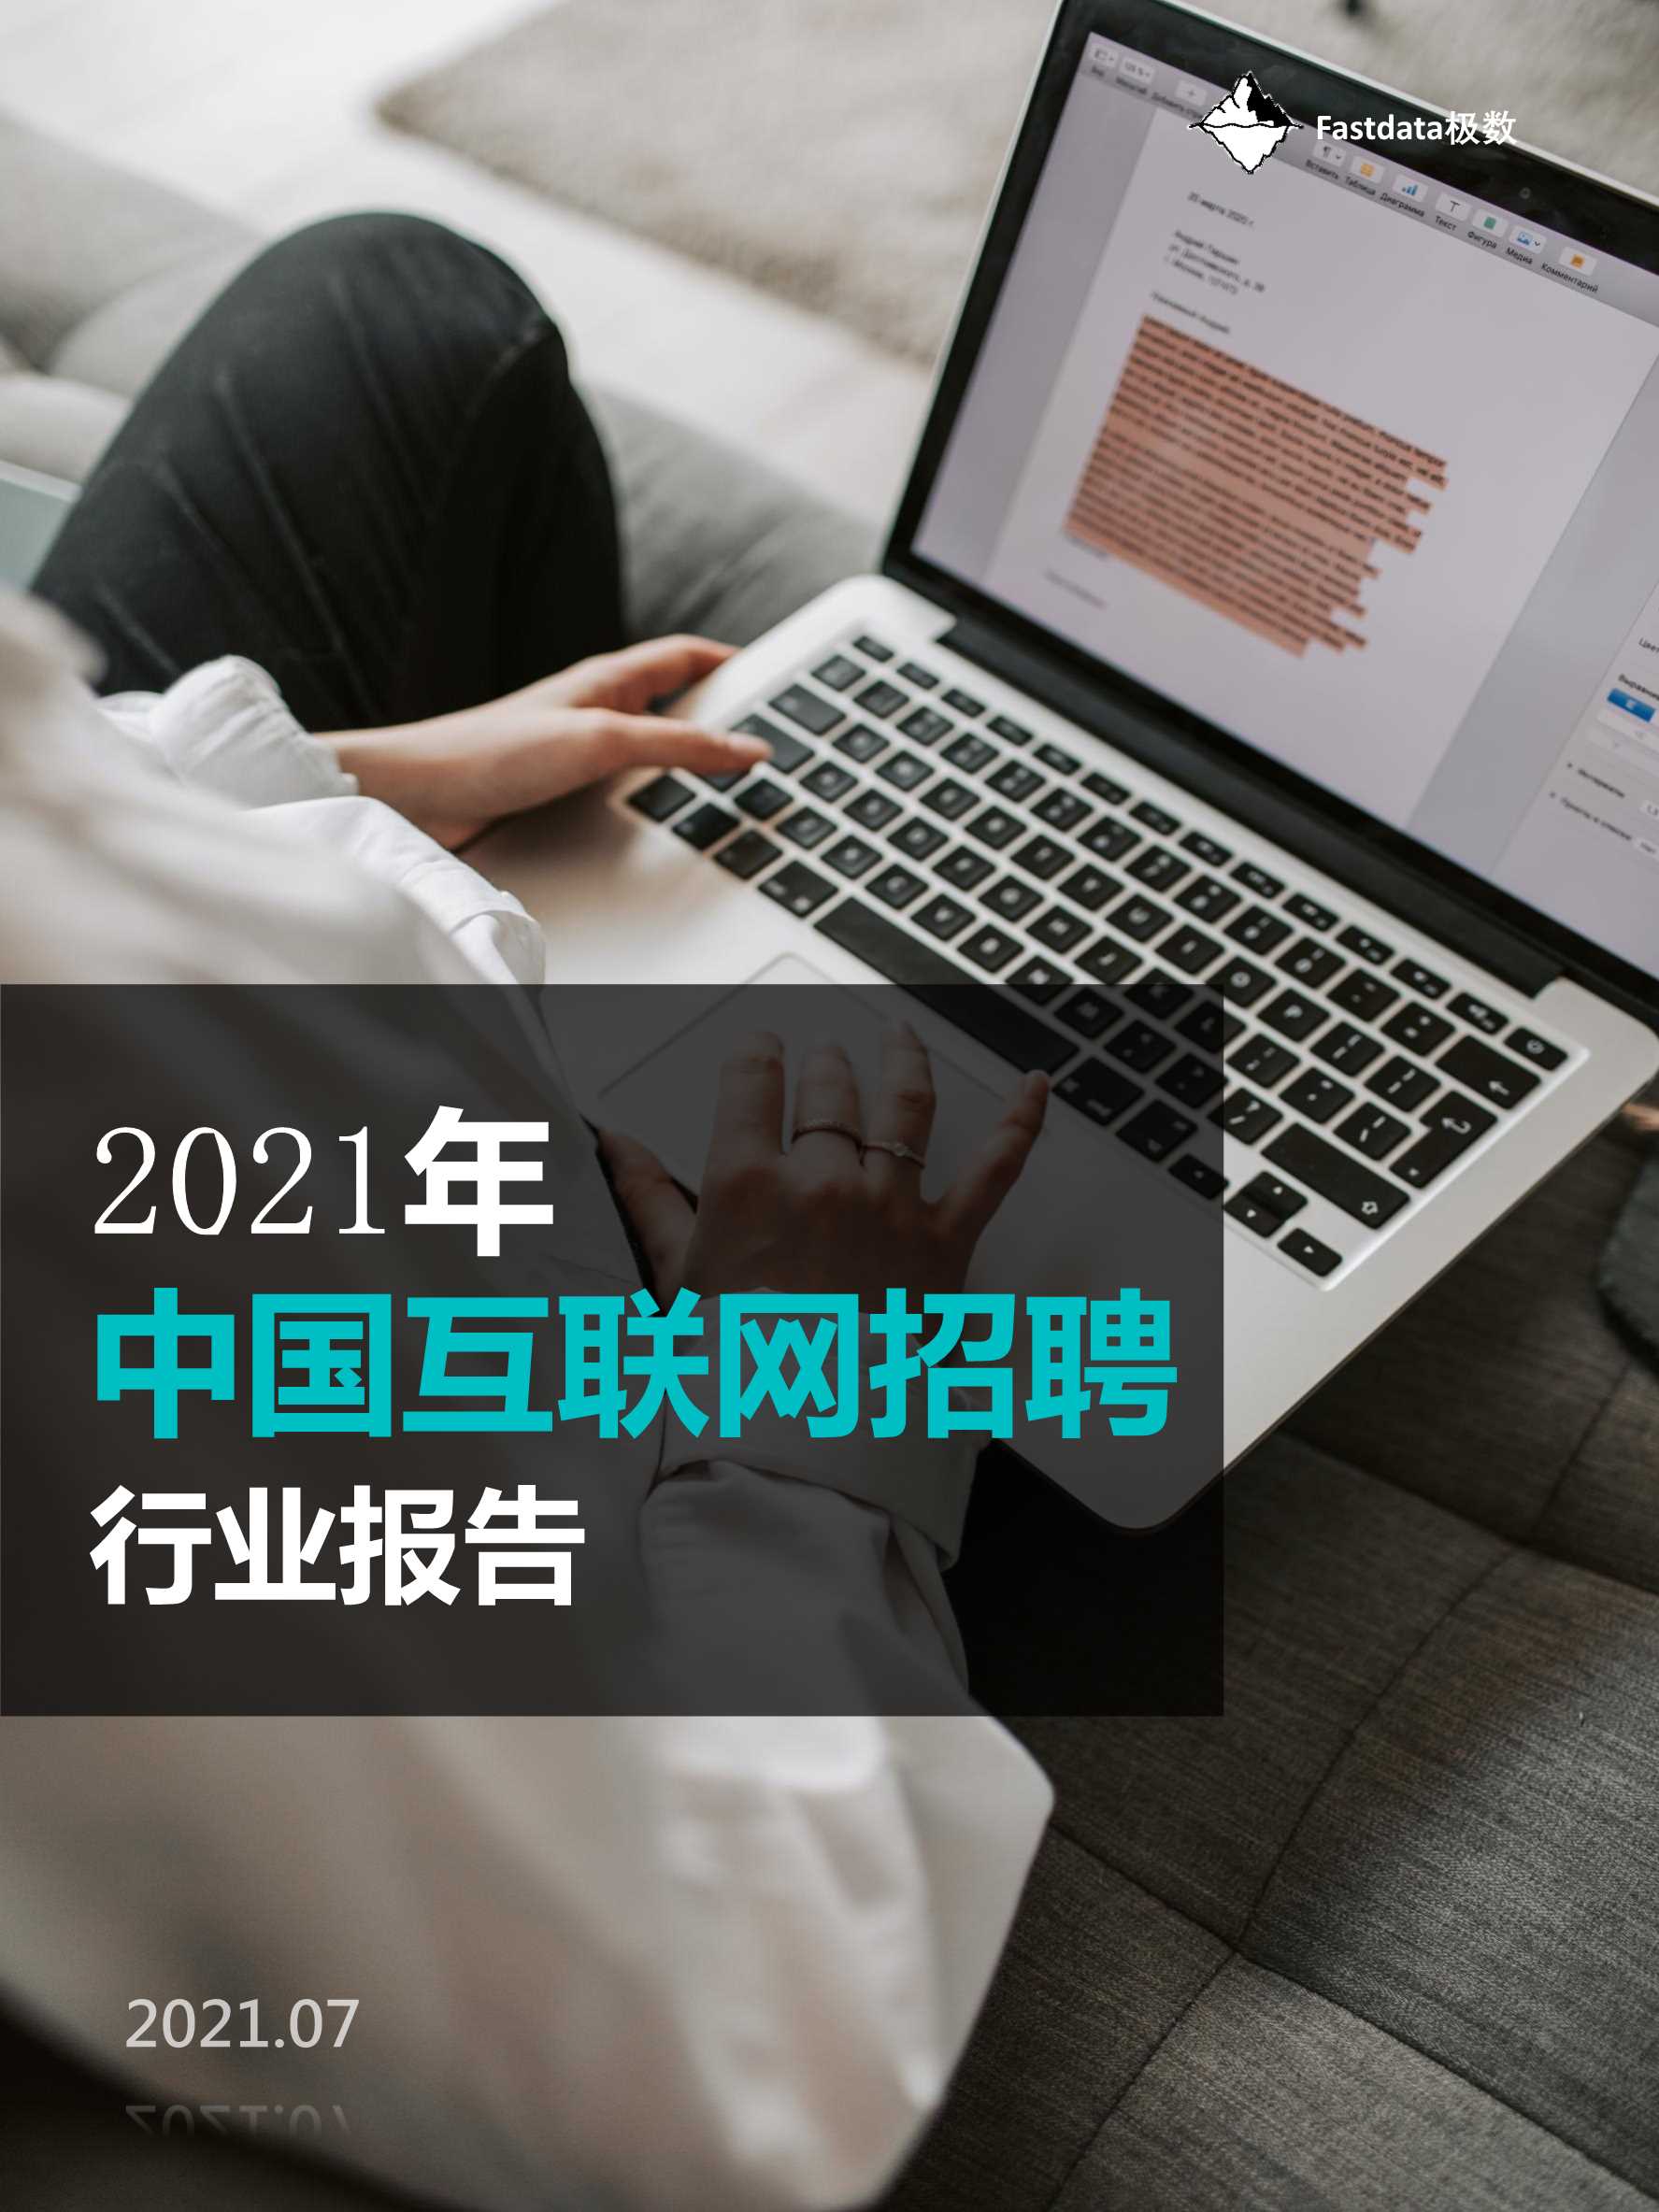 Fastdata极数-2021年中国互联网招聘行业报告-2021.07-45页